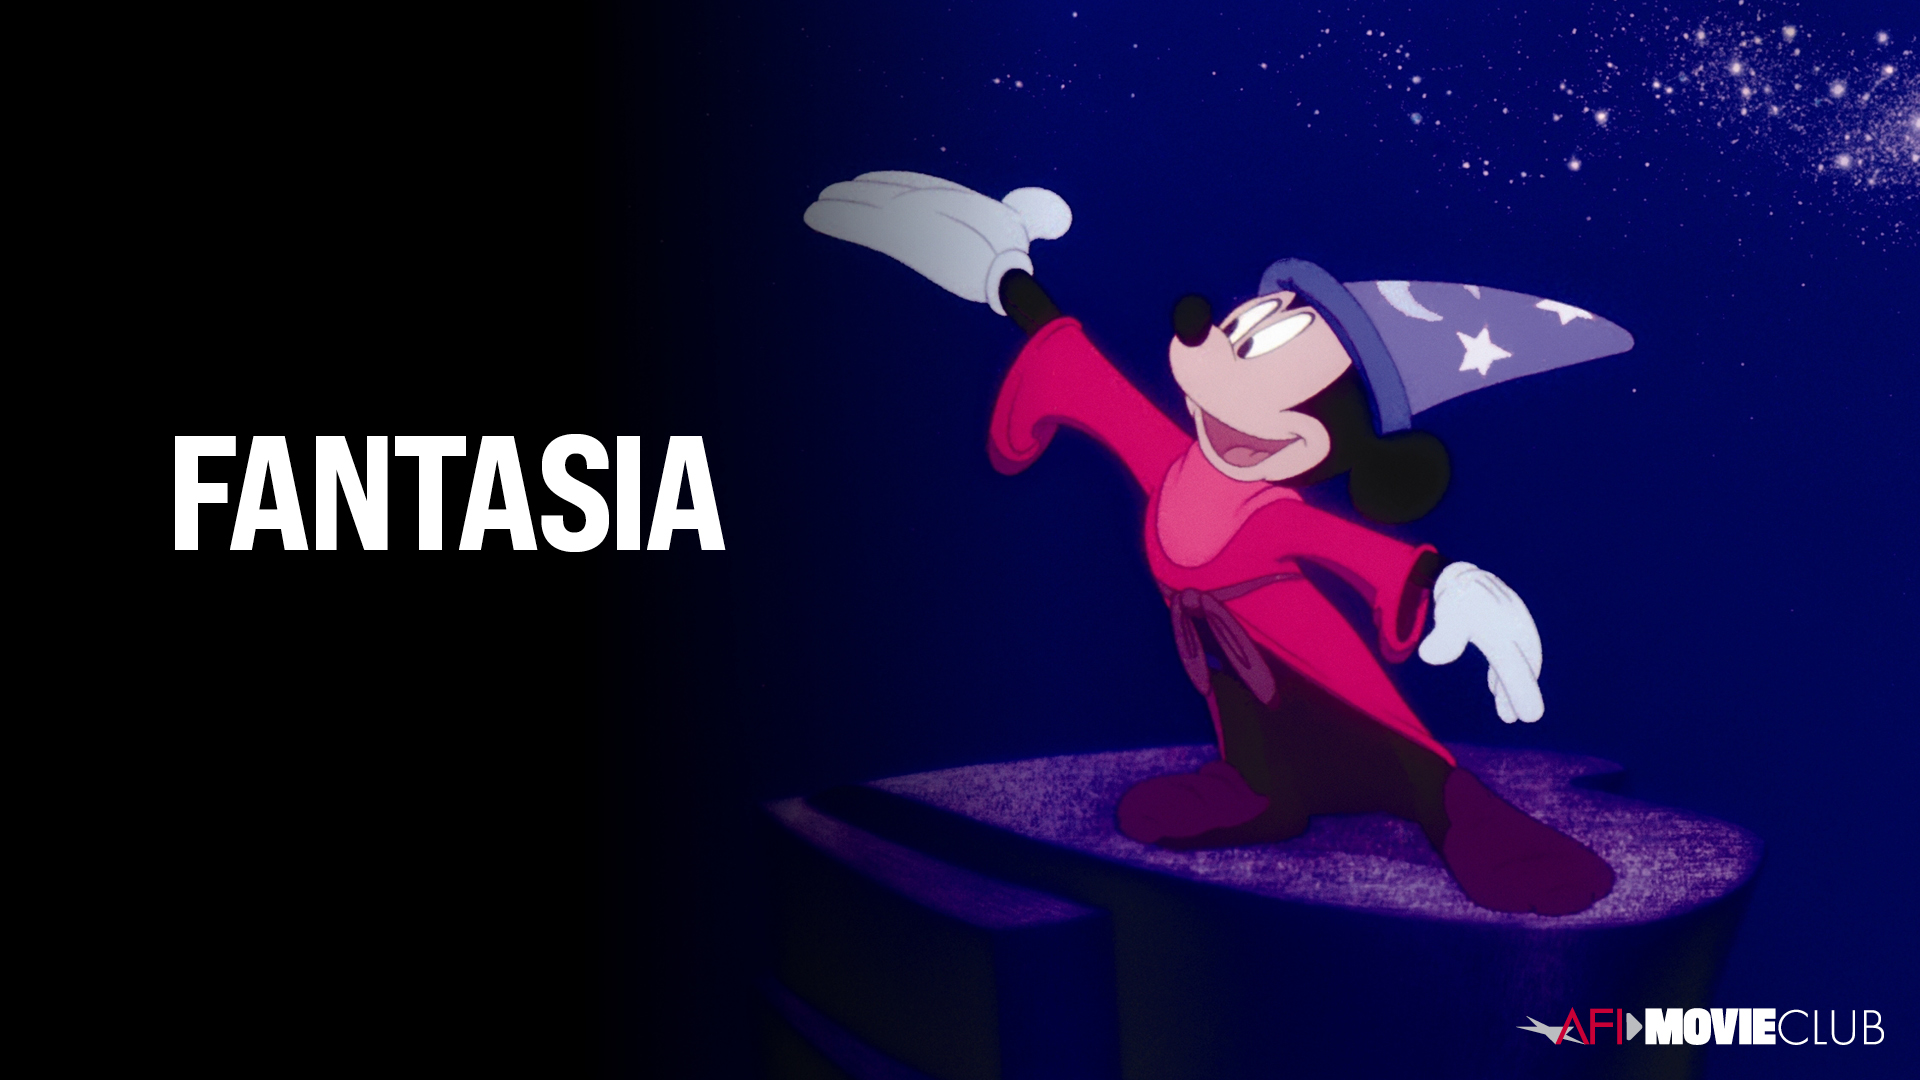 Fantasia Film Still - Mickey Mouse